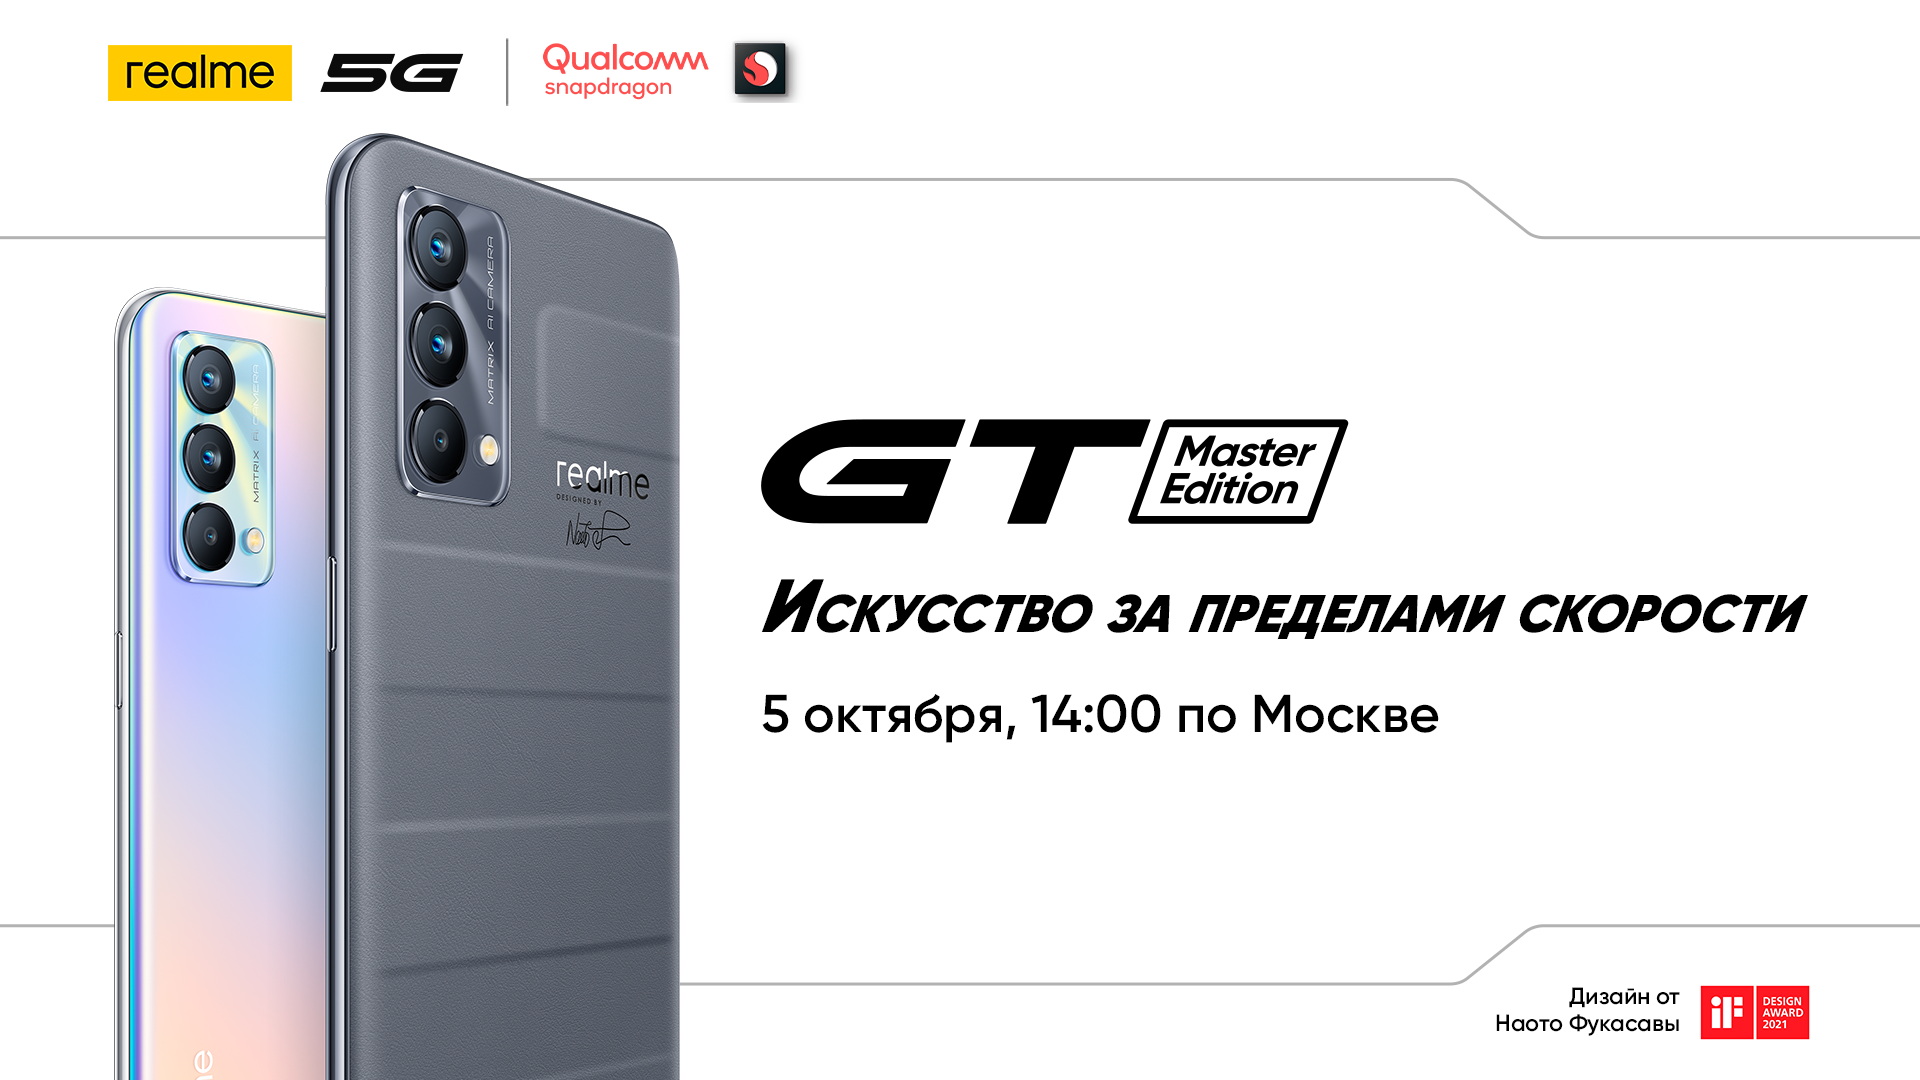  Realme GT Master Edition едет в Россию: дата проведения презентации Другие устройства  - realme_gt_master_edition_speshit_v_rossiu_data_prezentacii_picture2_0